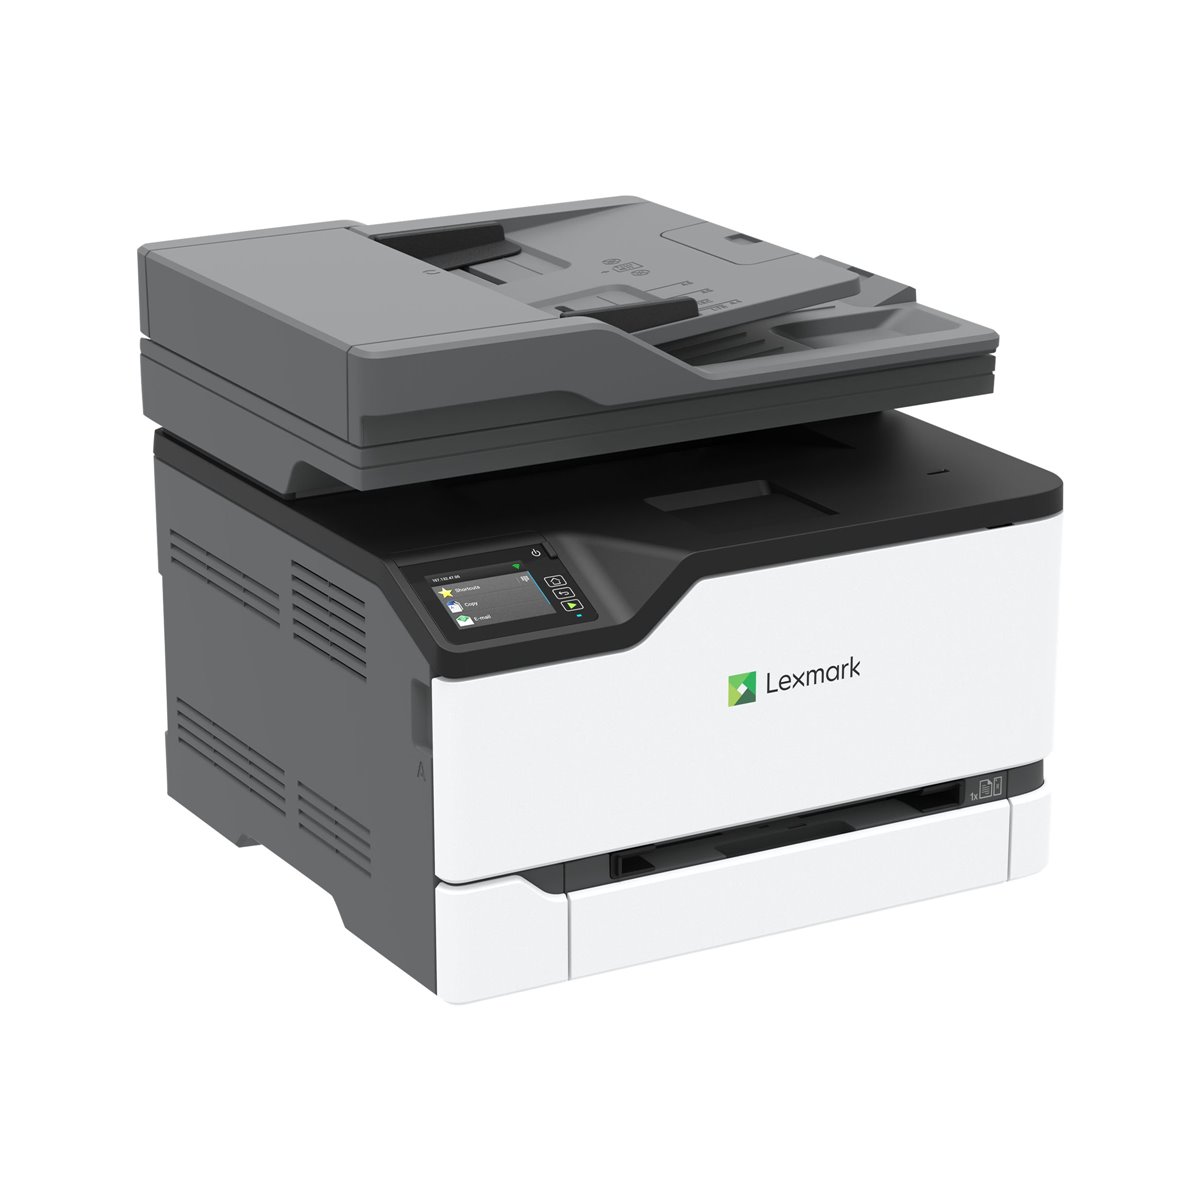 Lexmark XC2326 - Multifunktionsdrucker - Farbe - Laser - A4-Legal Medien - Laser-Led - Colored